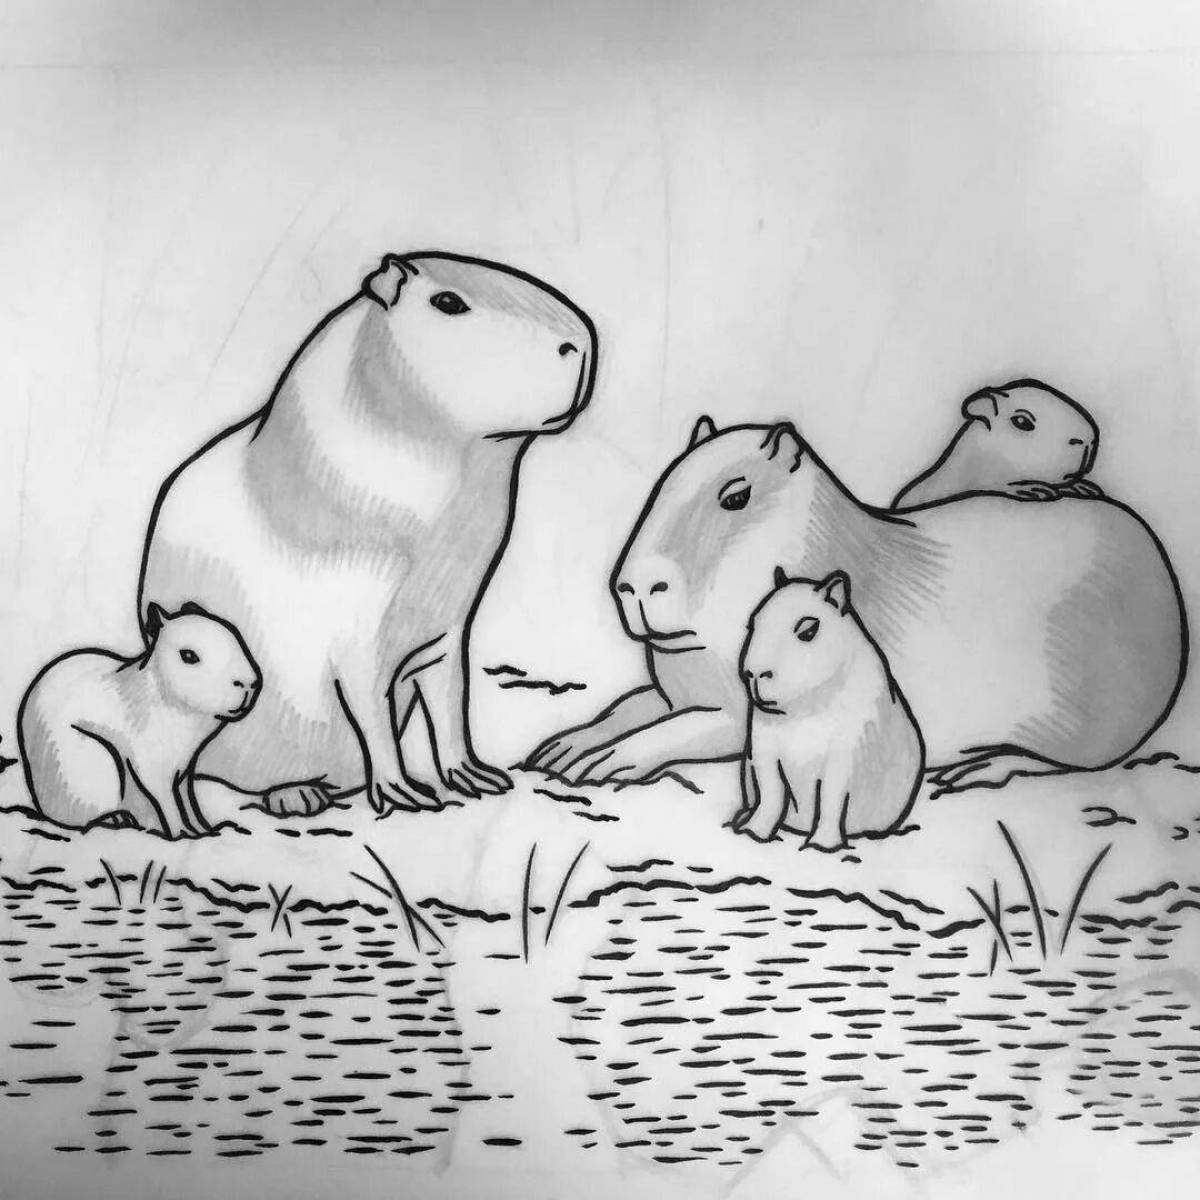 Coloring capybara for kids